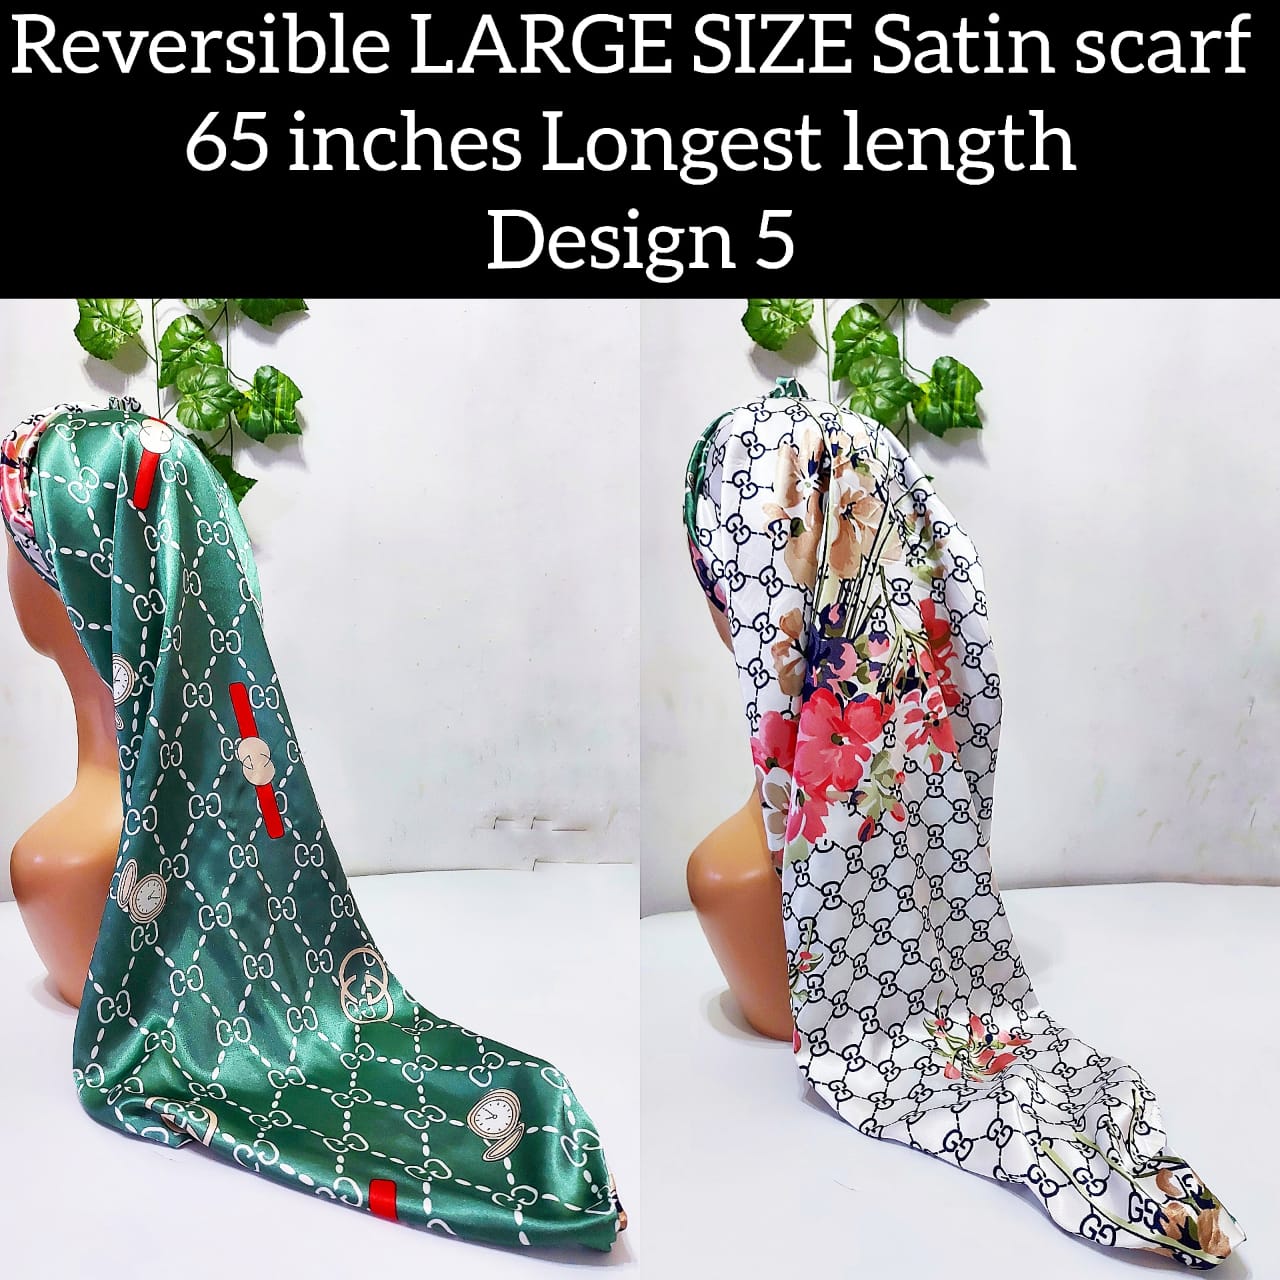 Reversible LARGE SIZE Satin scarf Design 5